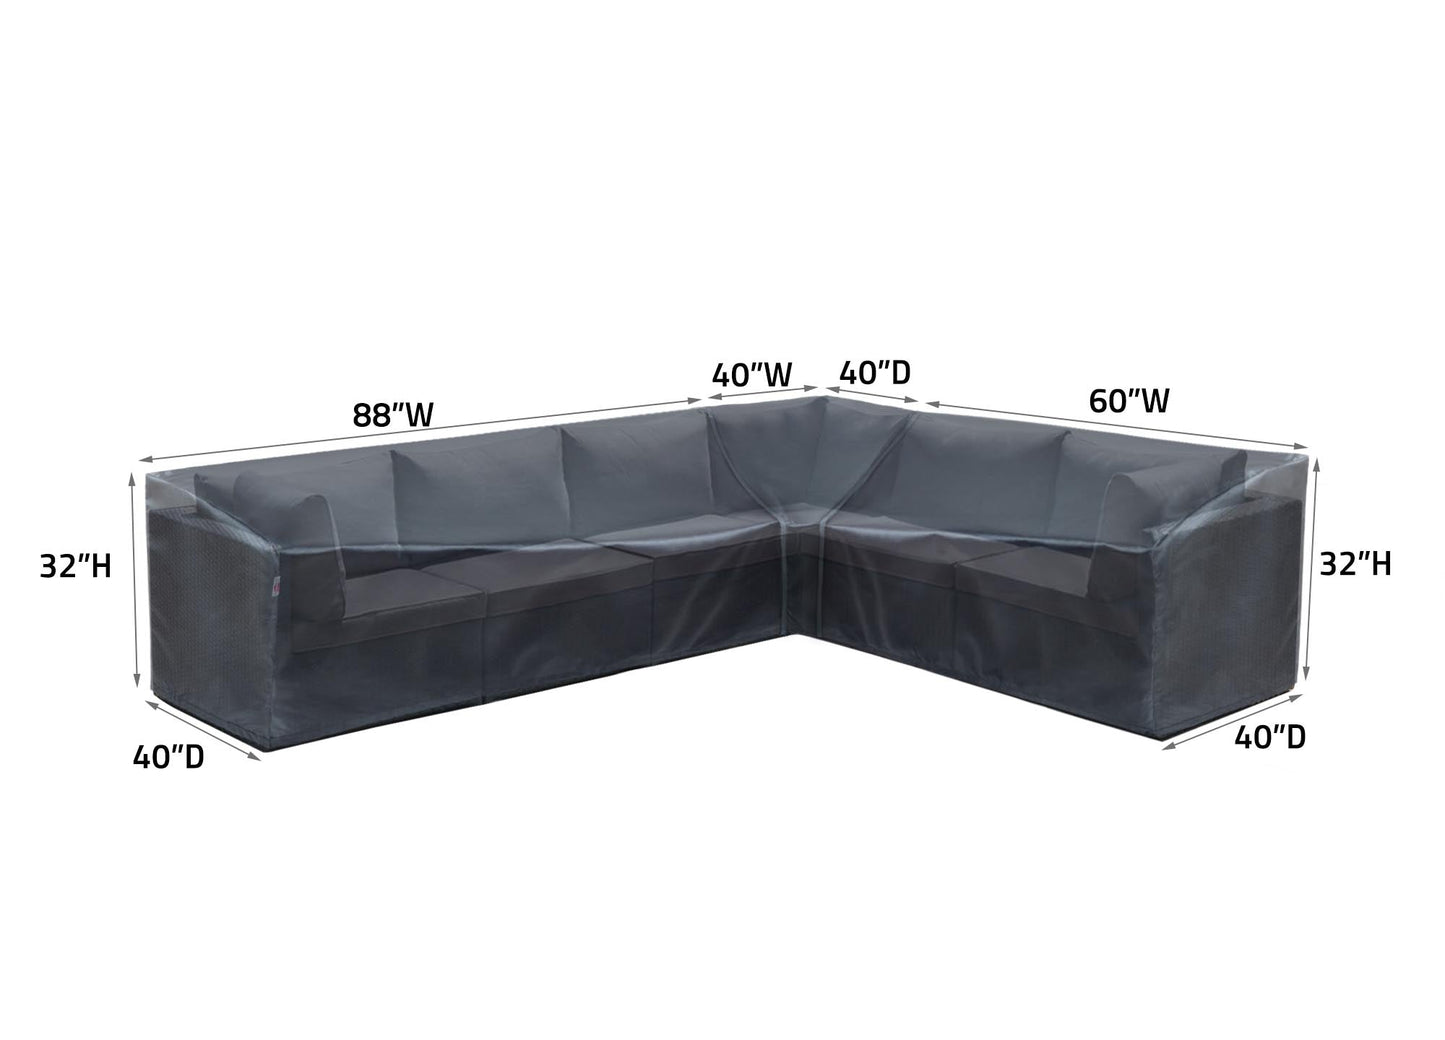 Modular Cover Sofa Left End - 88"Wx40"Dx18"H
- Mercury